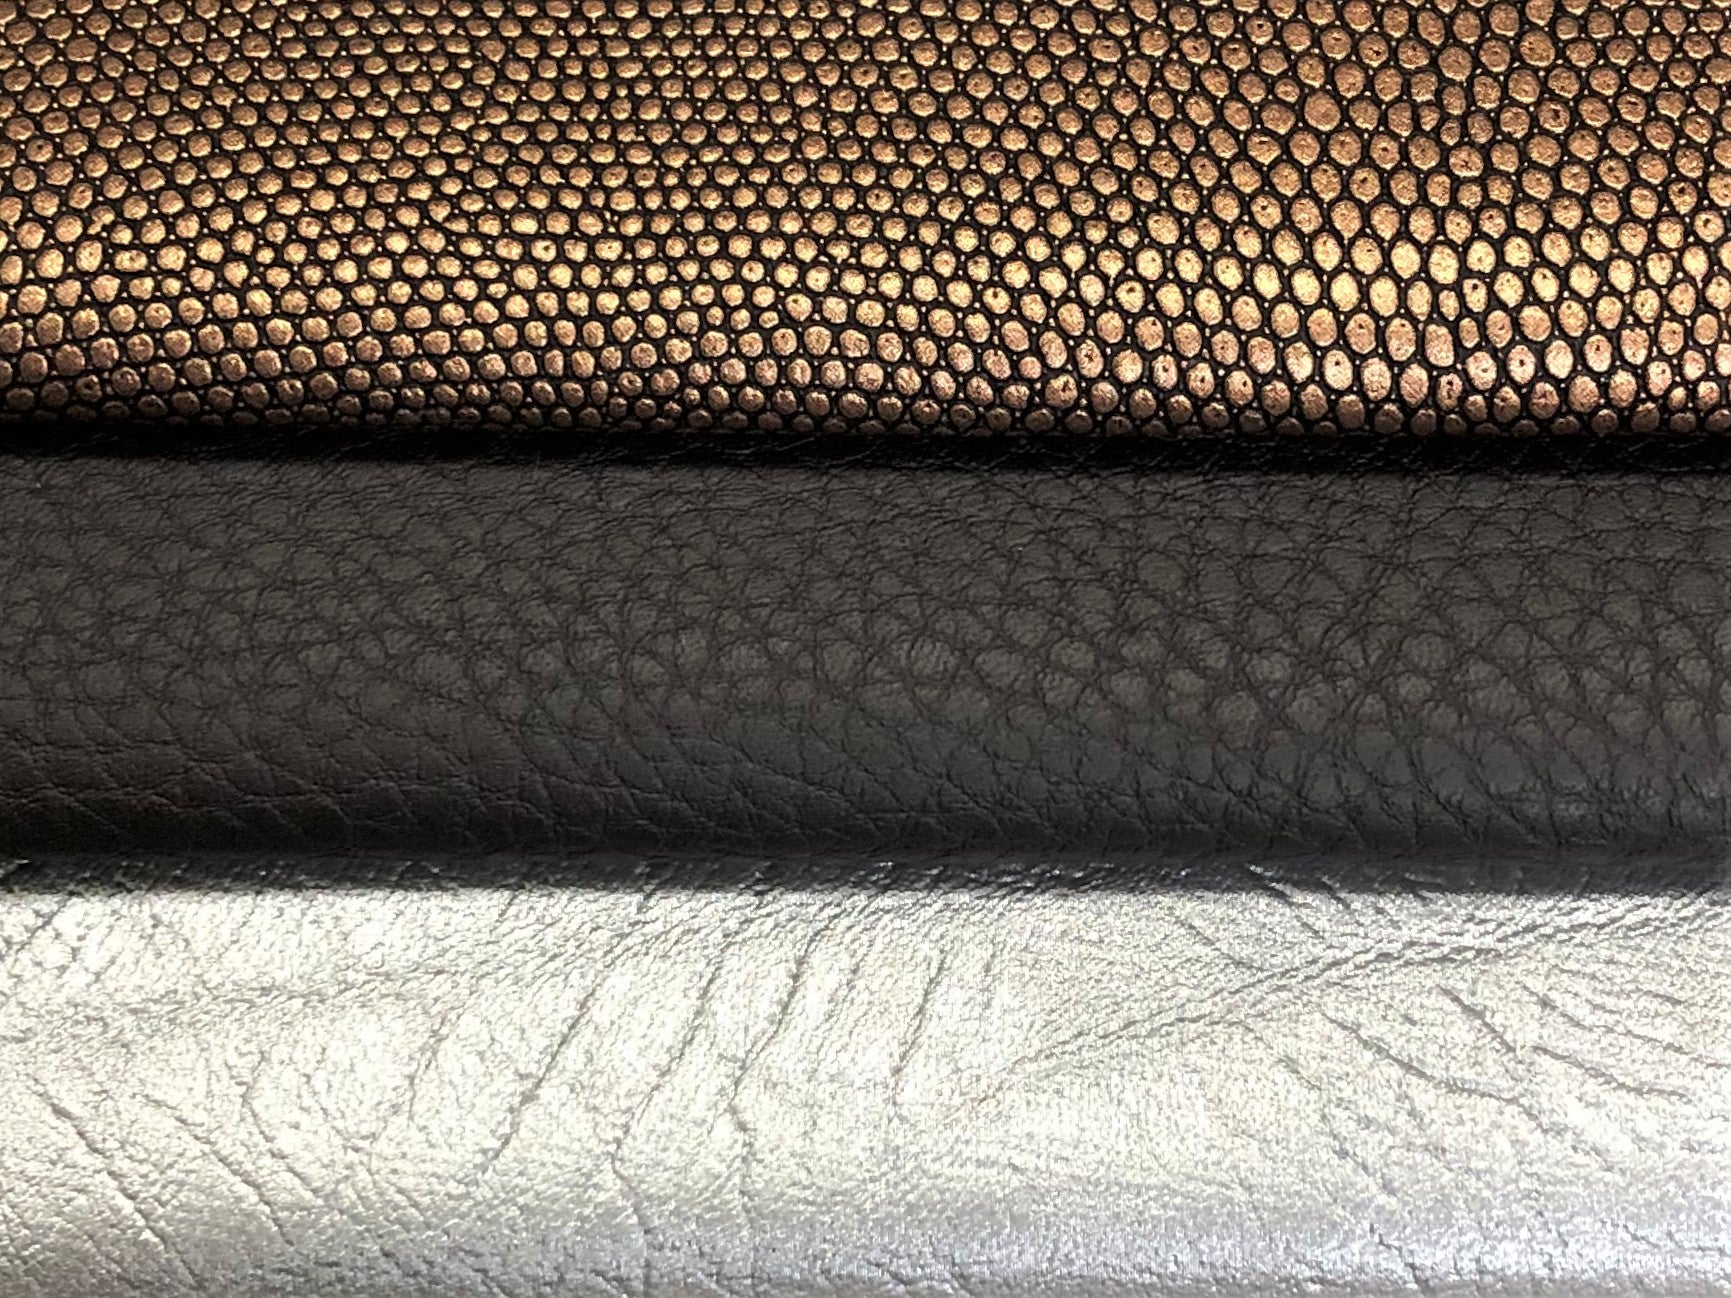 Metallic Silver Textured Faux Leather Sheet